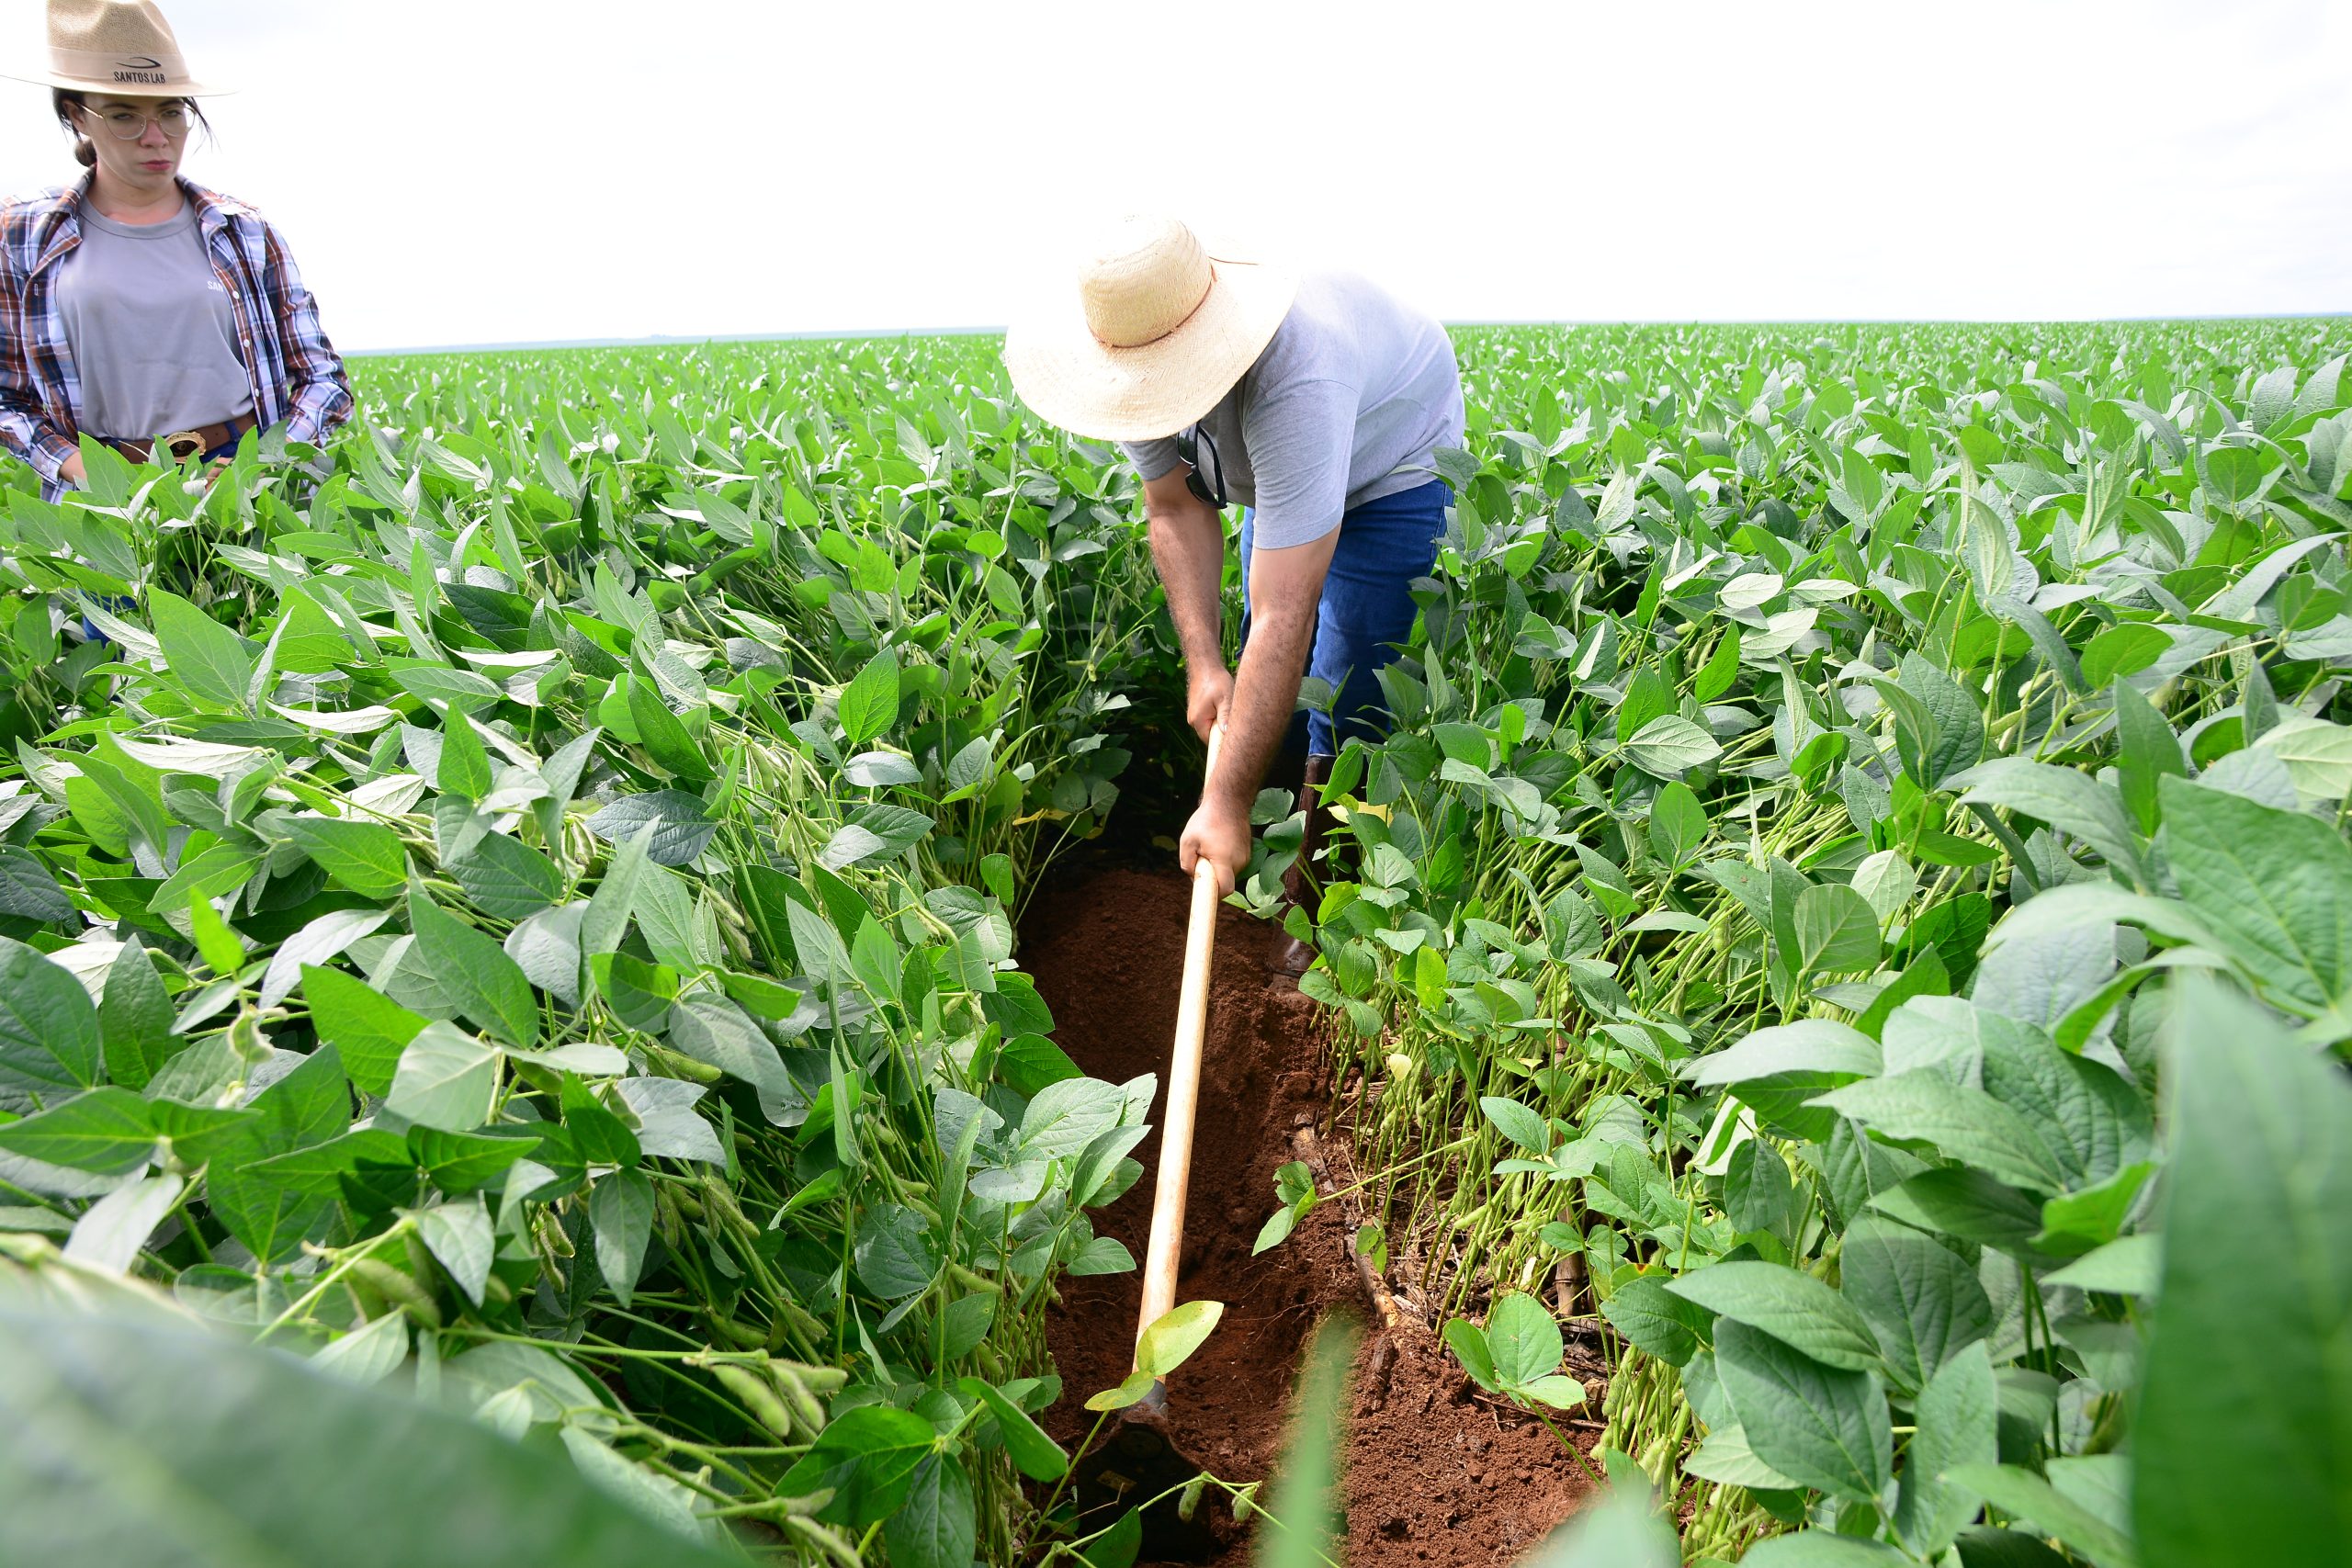 A man shovels the soil in a plantation.